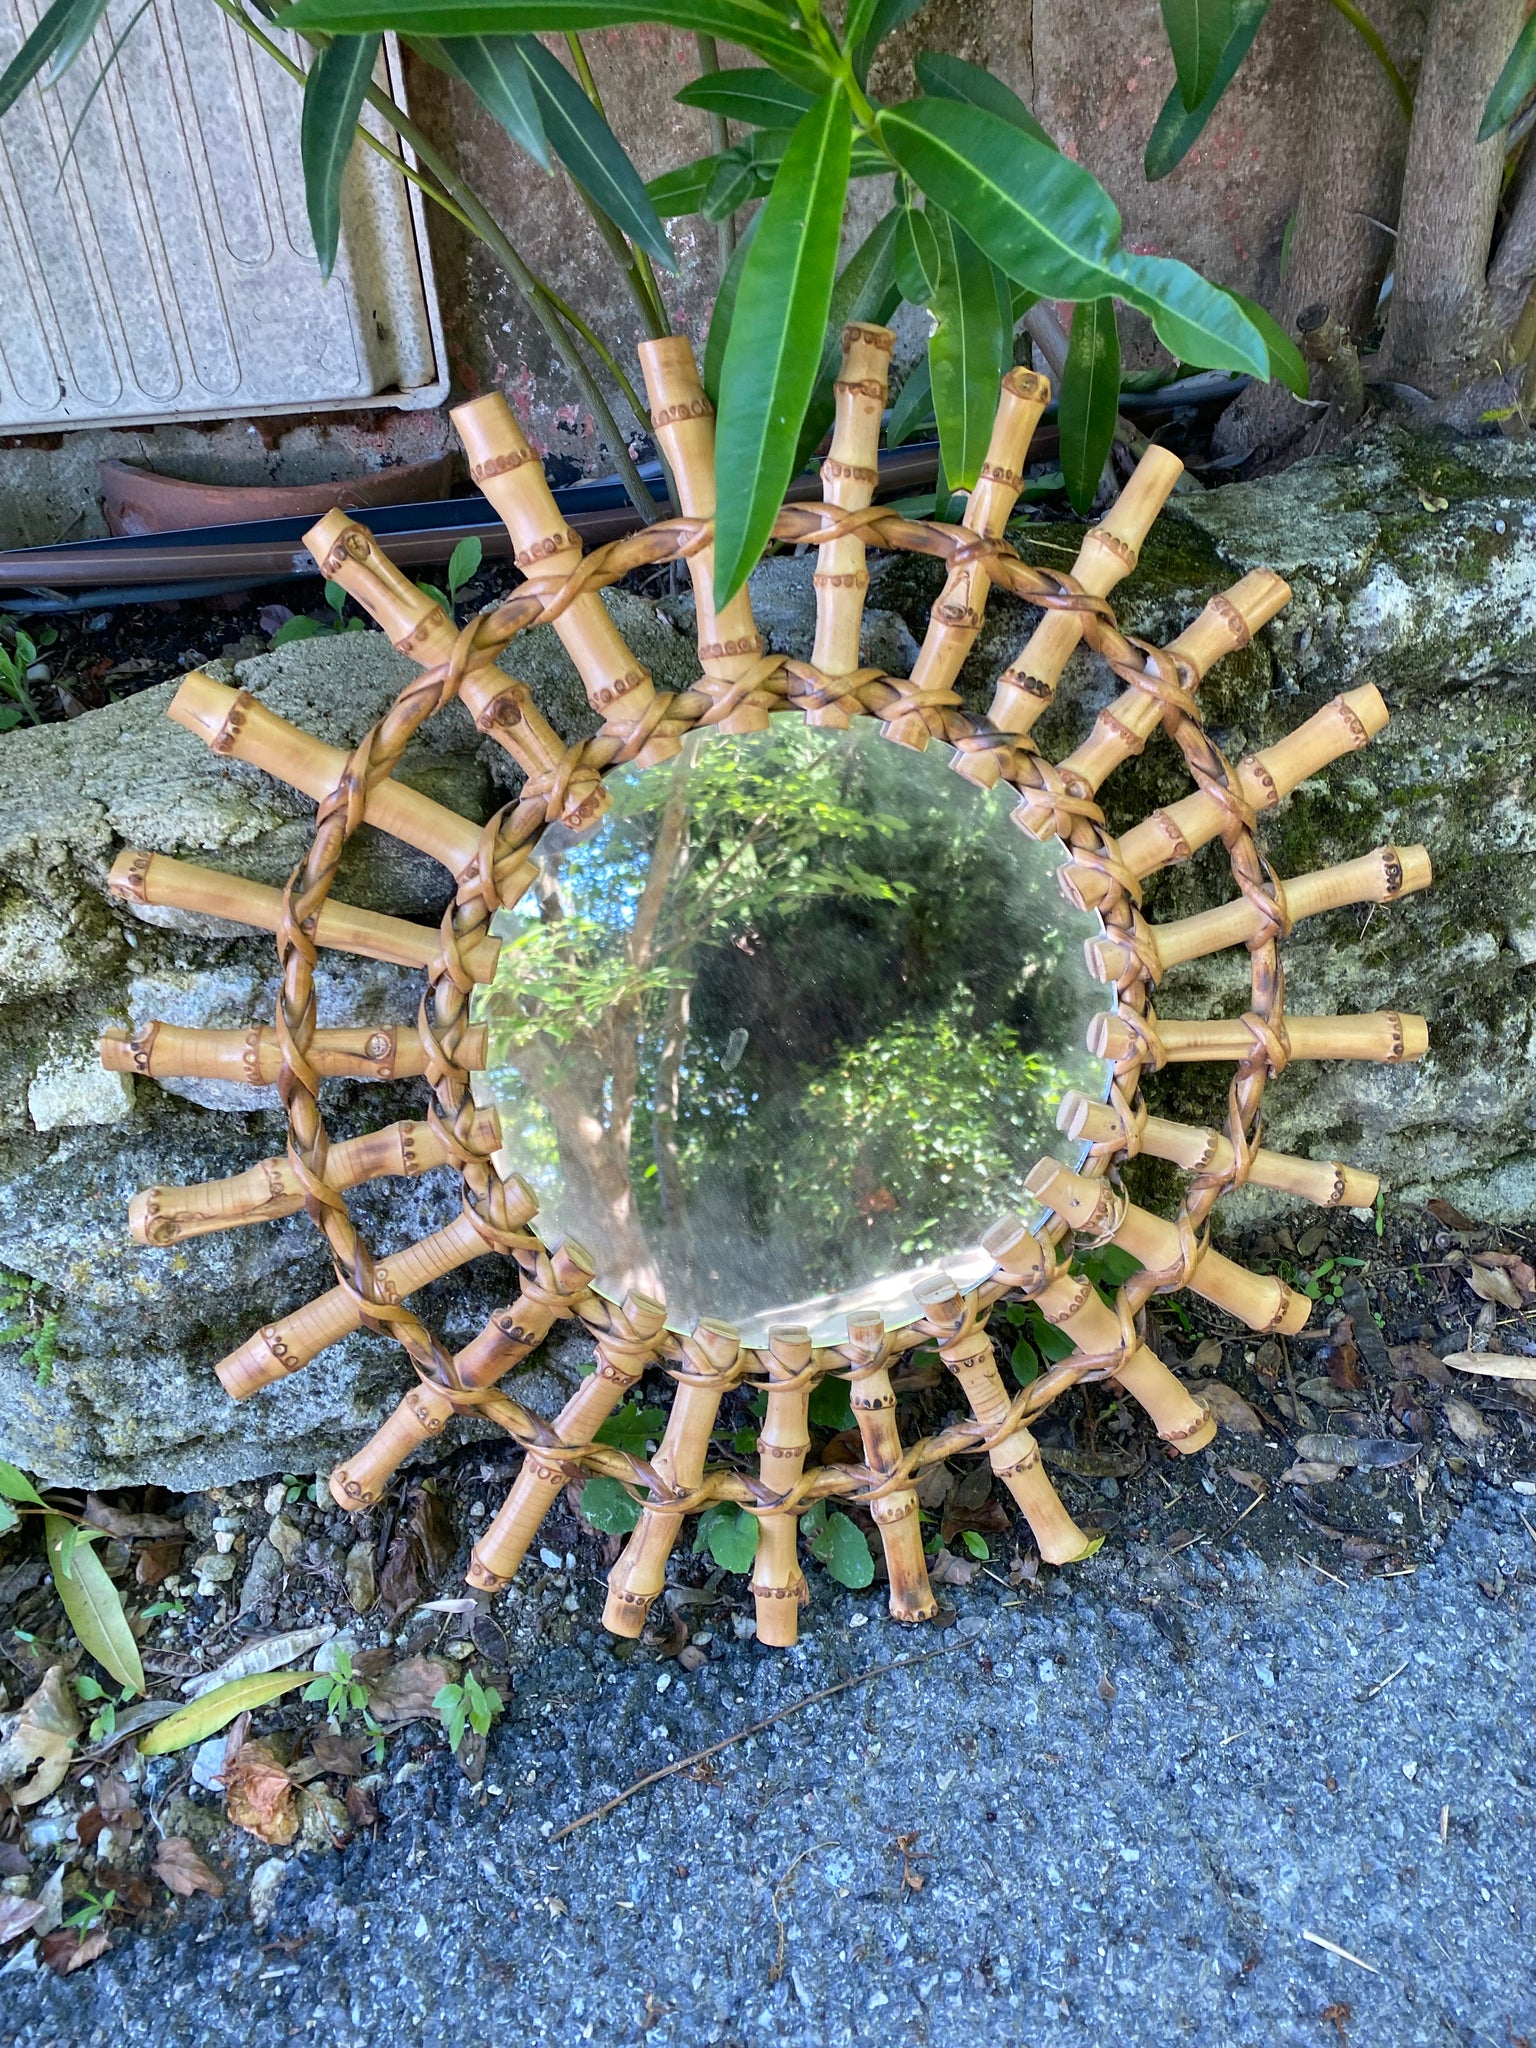 French Bamboo Sunburst Mirror